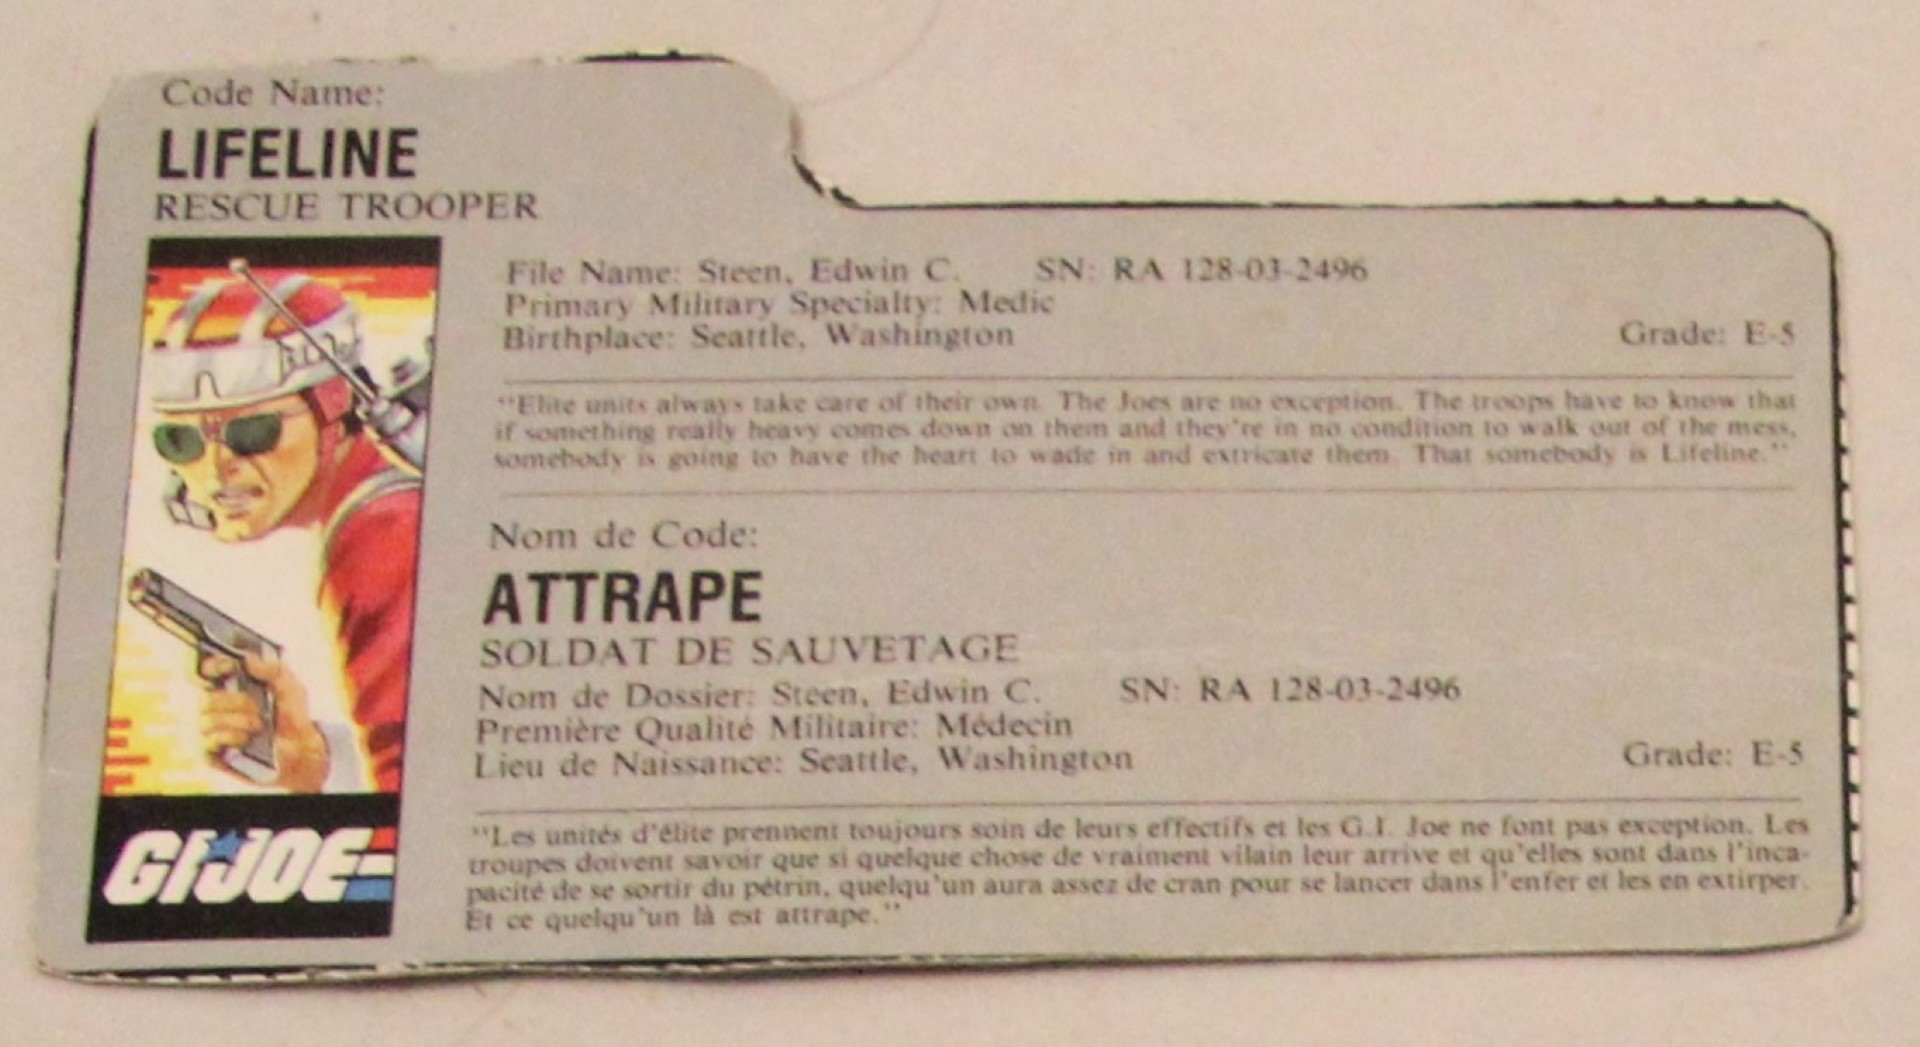 1986 lifeline file card